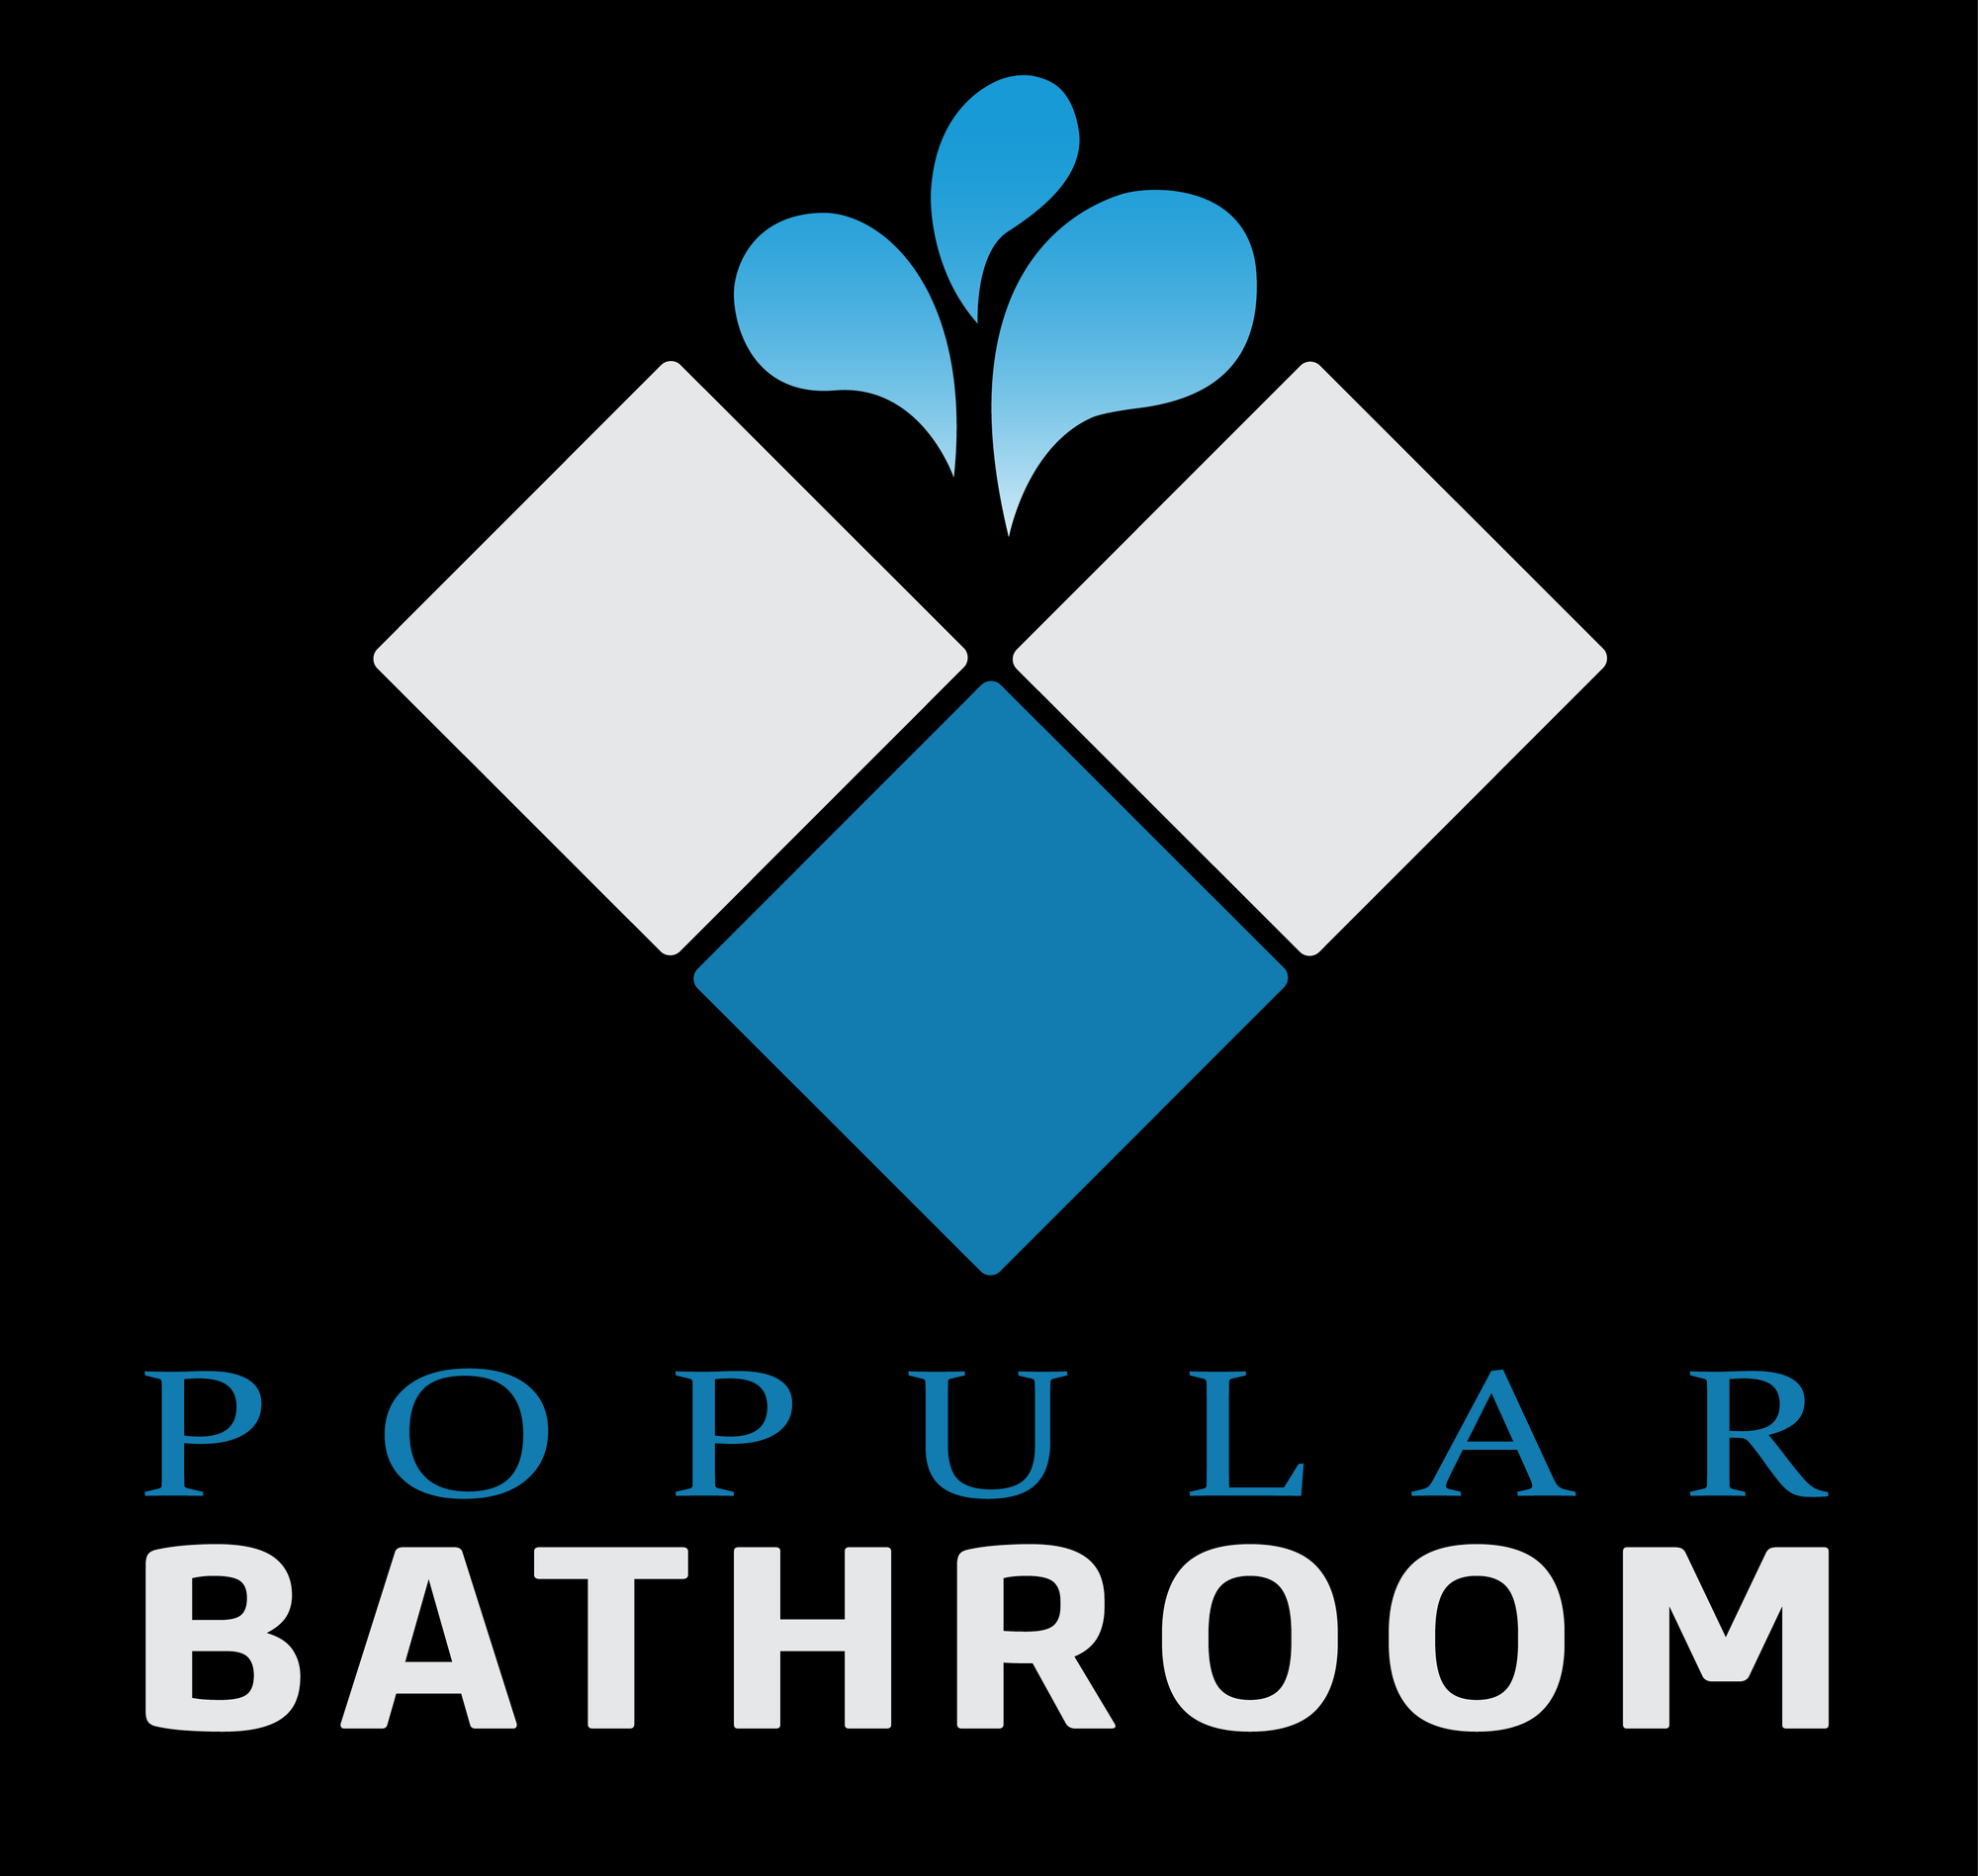 Popular Bathroom